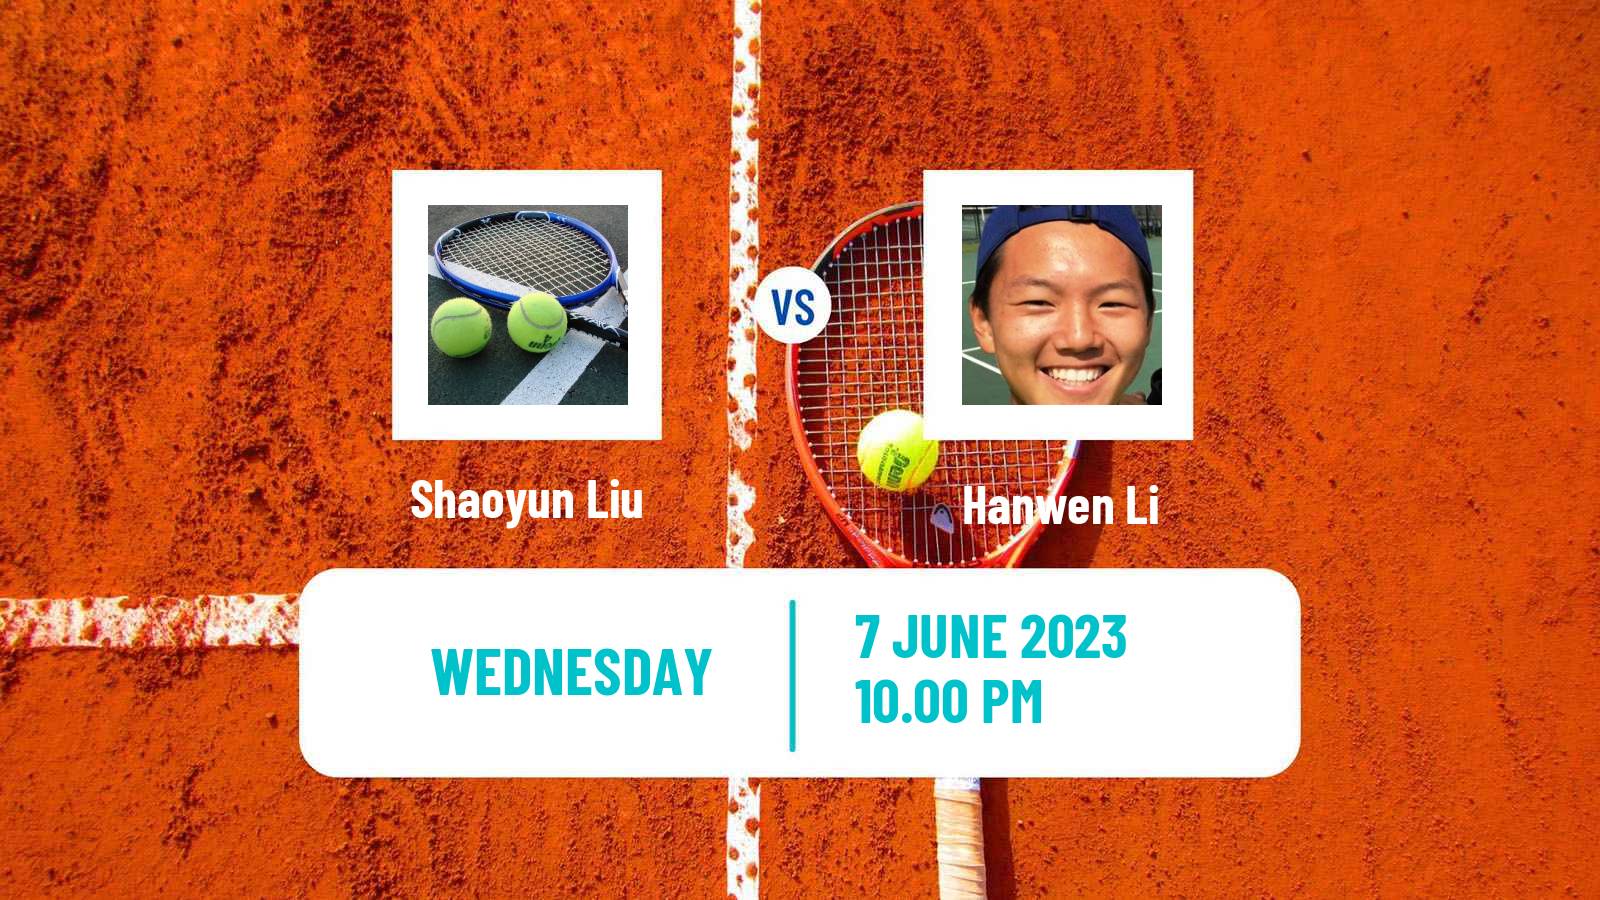 Tennis ITF M25 Luzhou Men Shaoyun Liu - Hanwen Li